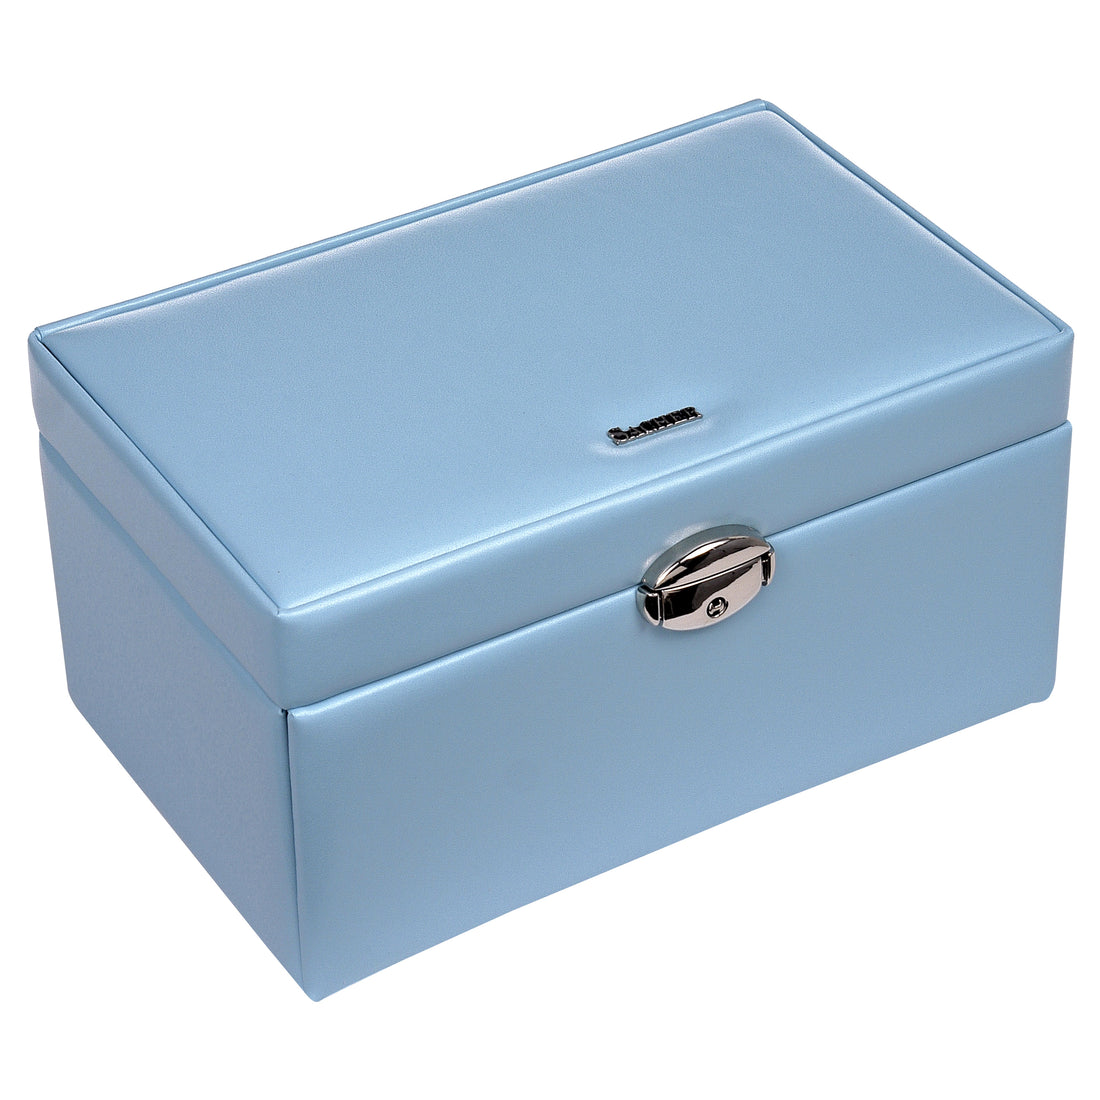 Caixa de jóias Elly coloranti / azul claro